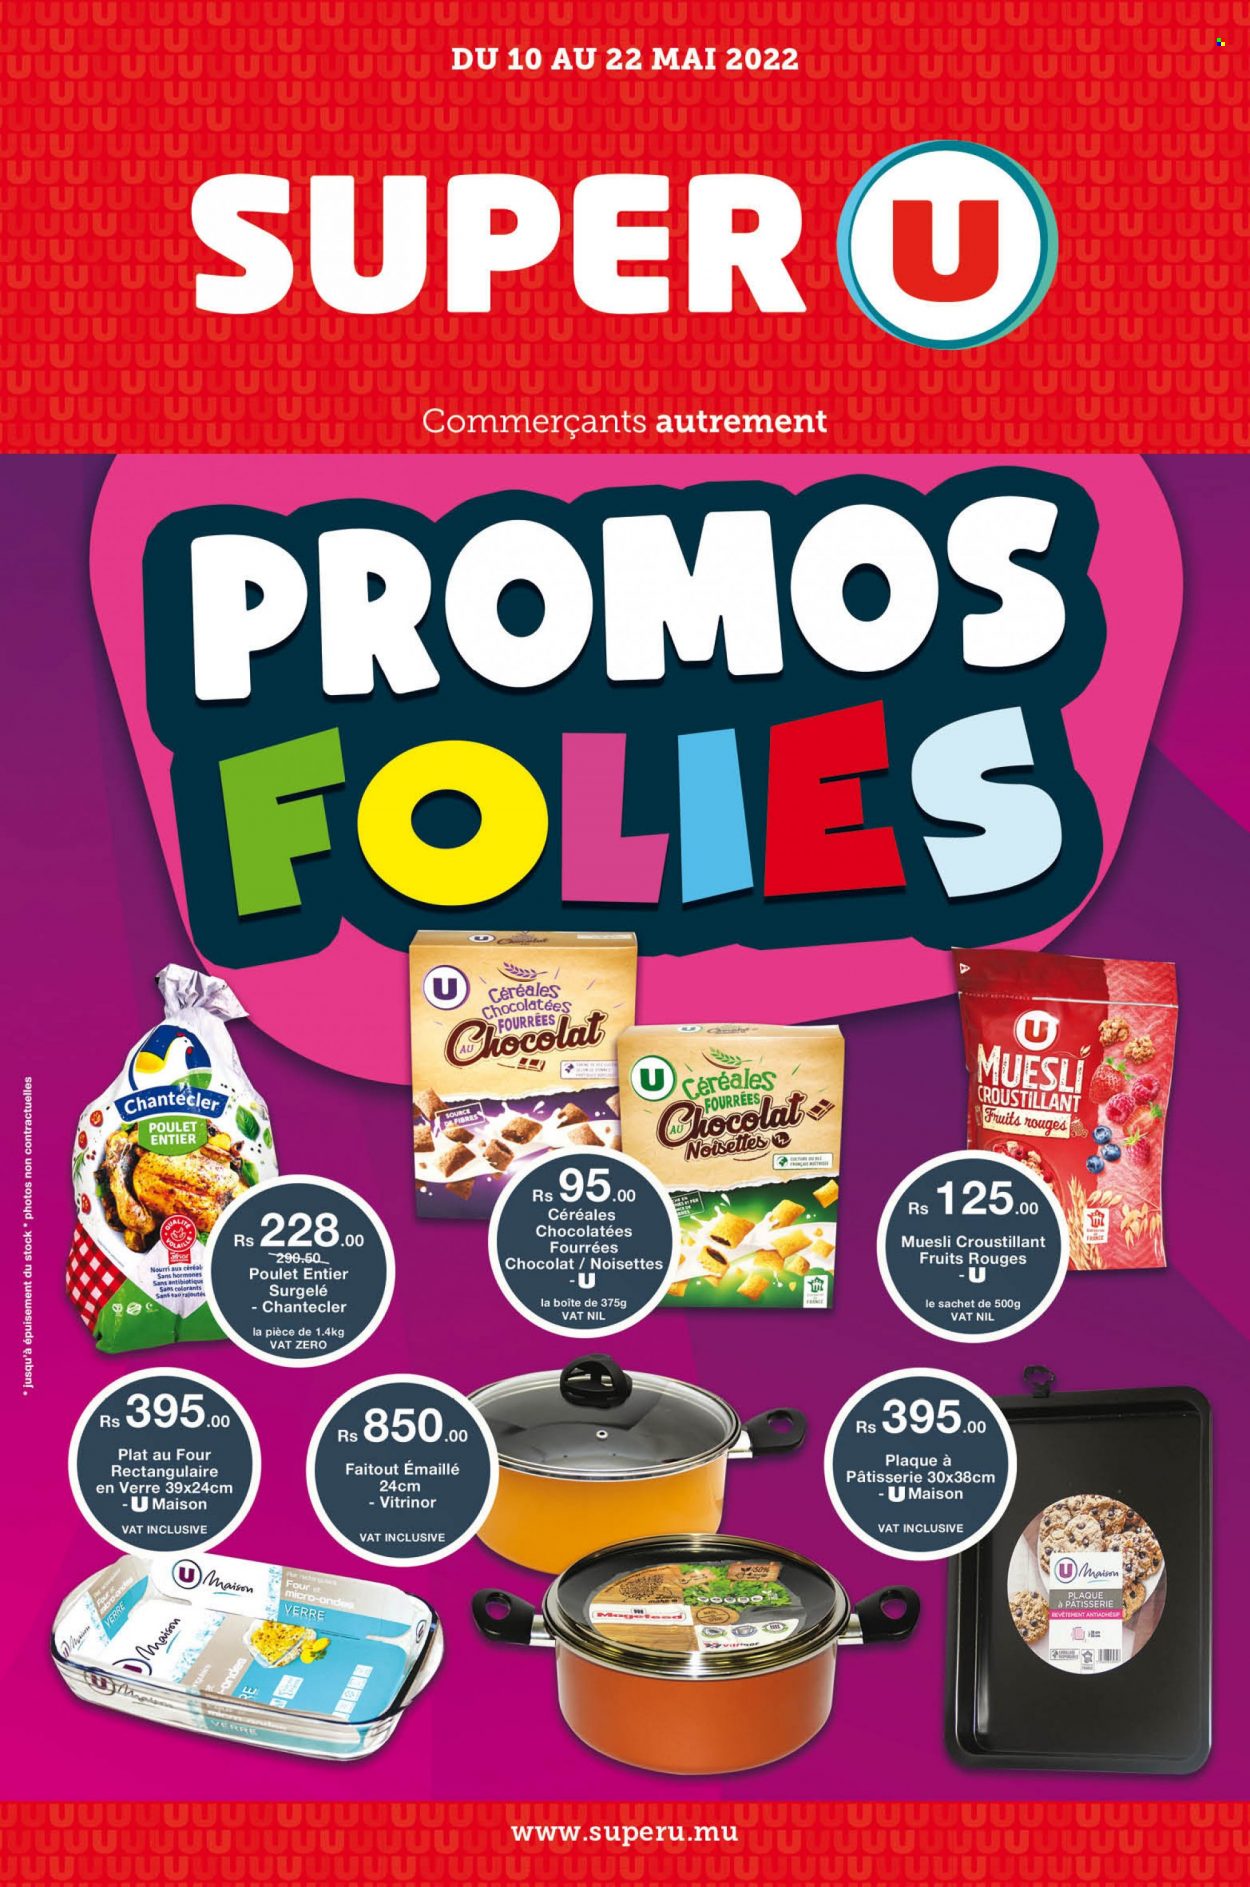 Super U Catalogue - 10.05.2022 - 22.05.2022 - Sales products - Ola, cereals, muesli. Page 1.